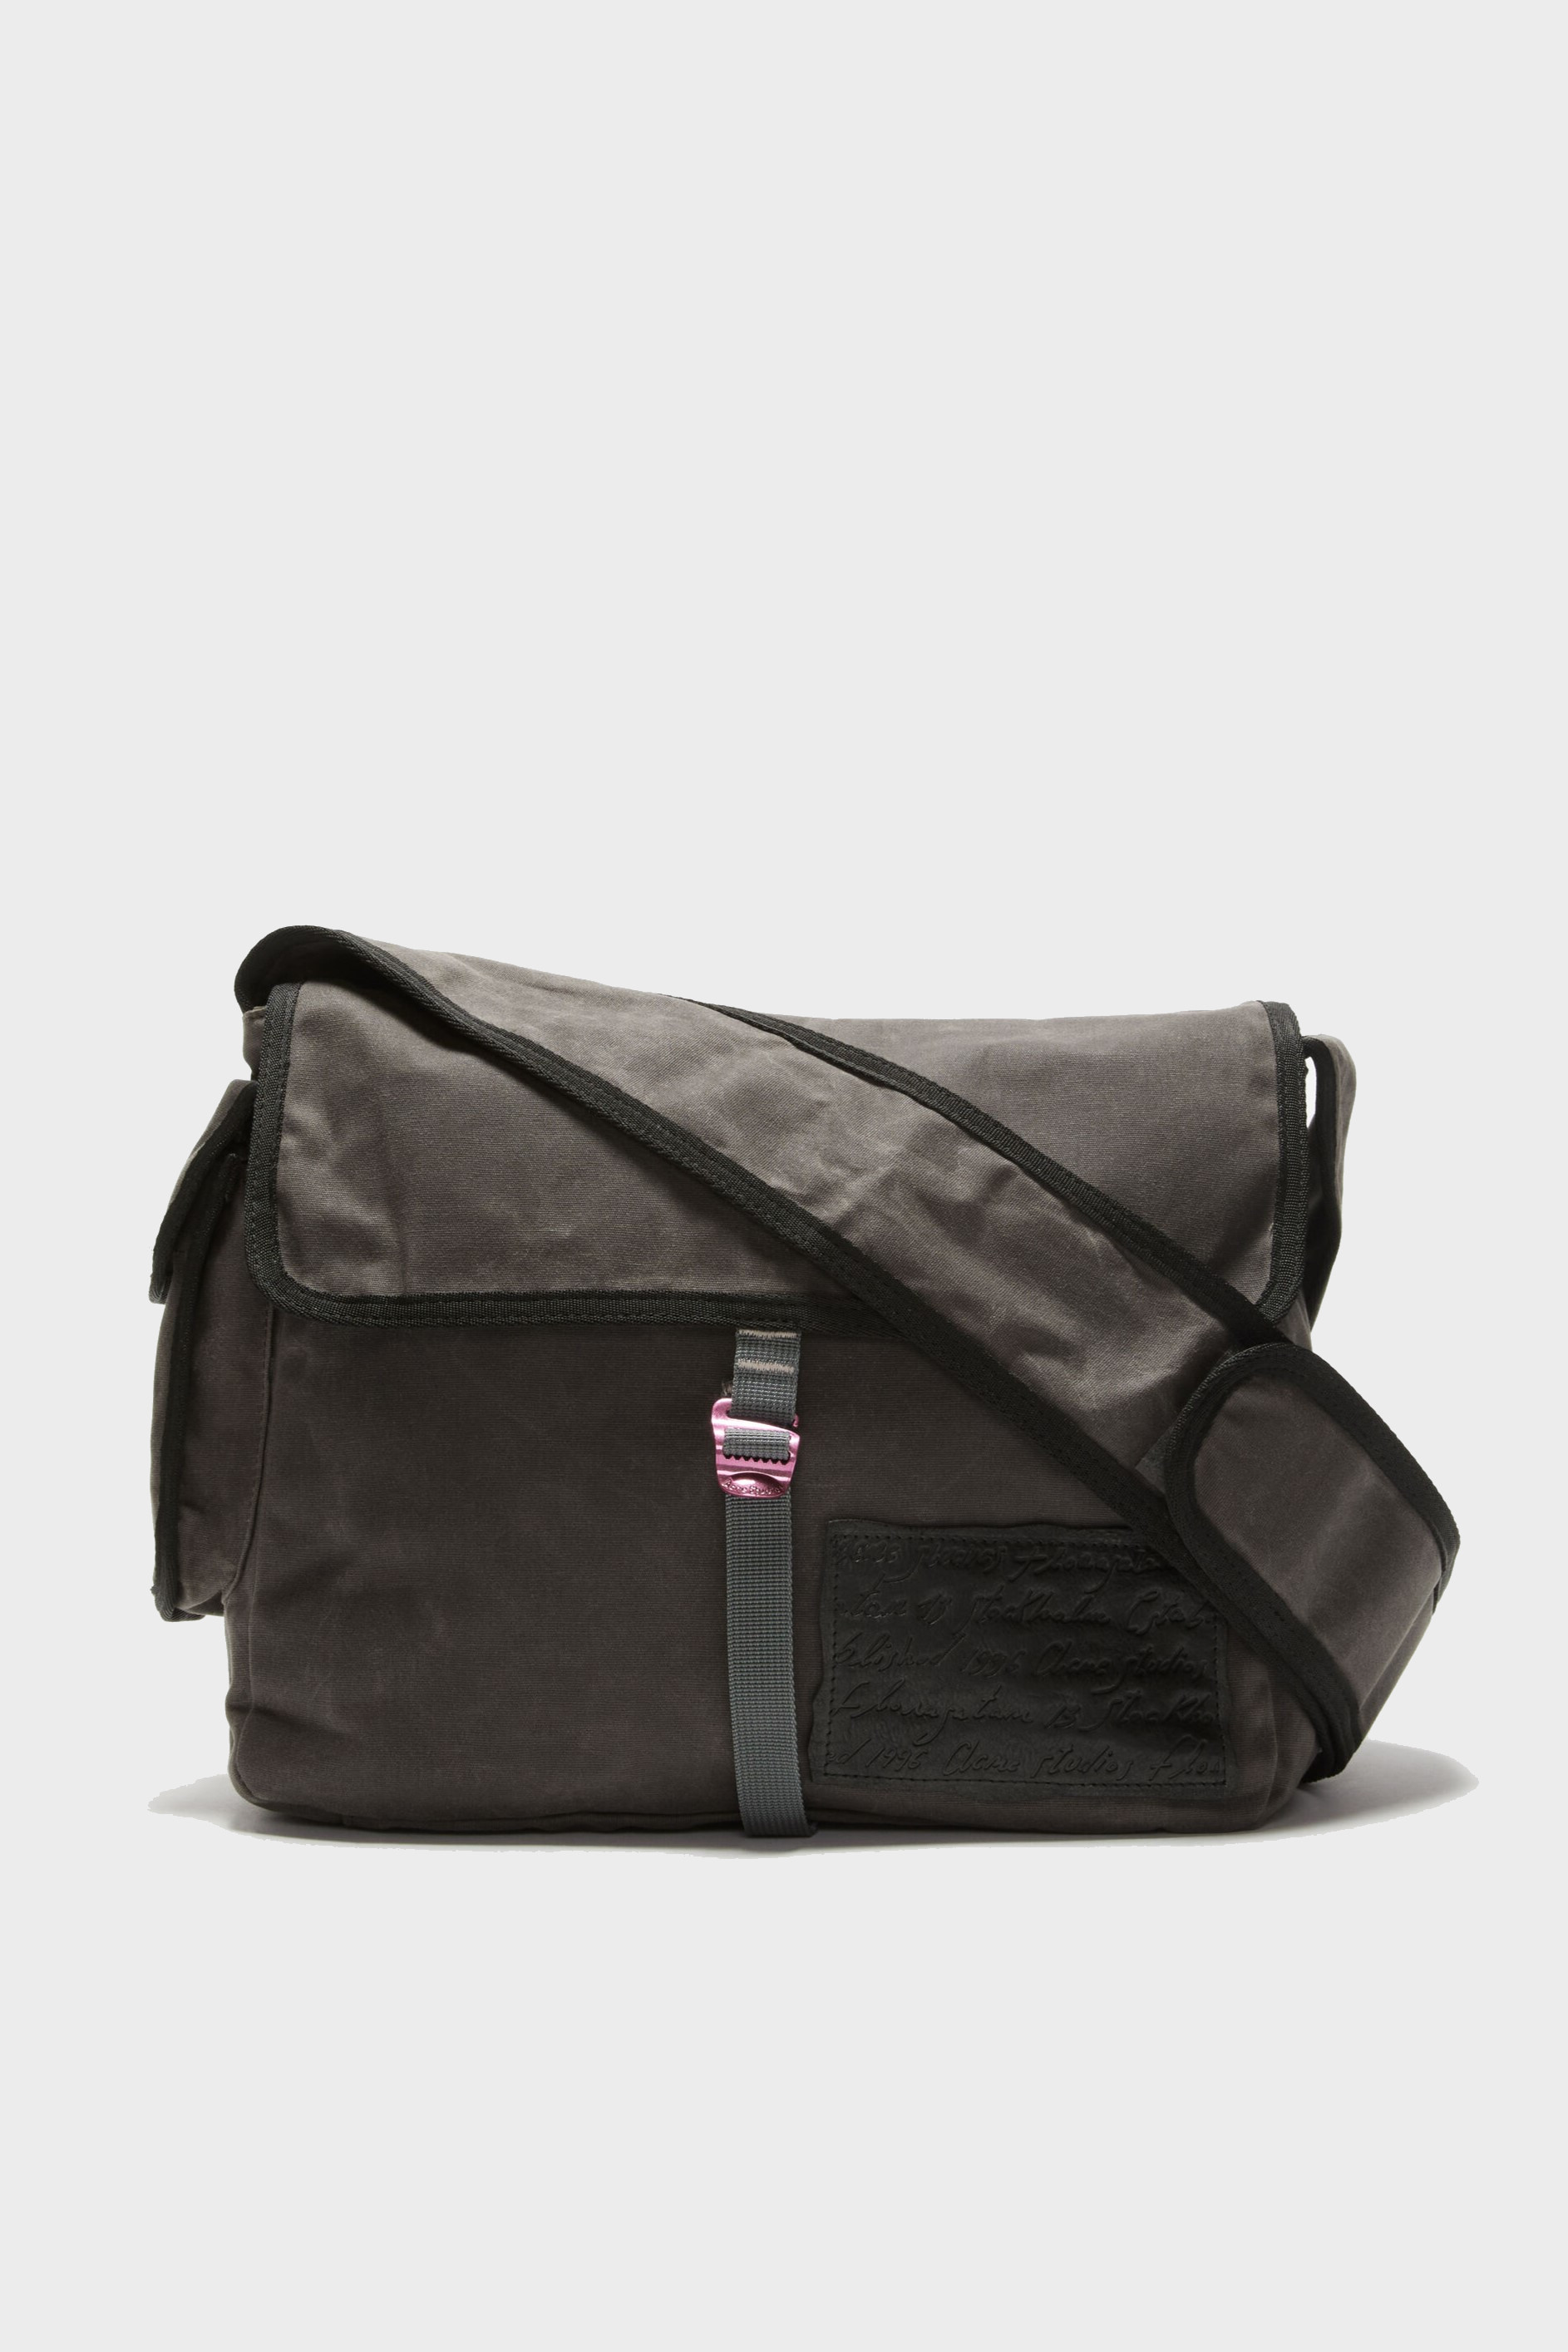 ACNE STUDIOS Messenger Bag in Grey/Black